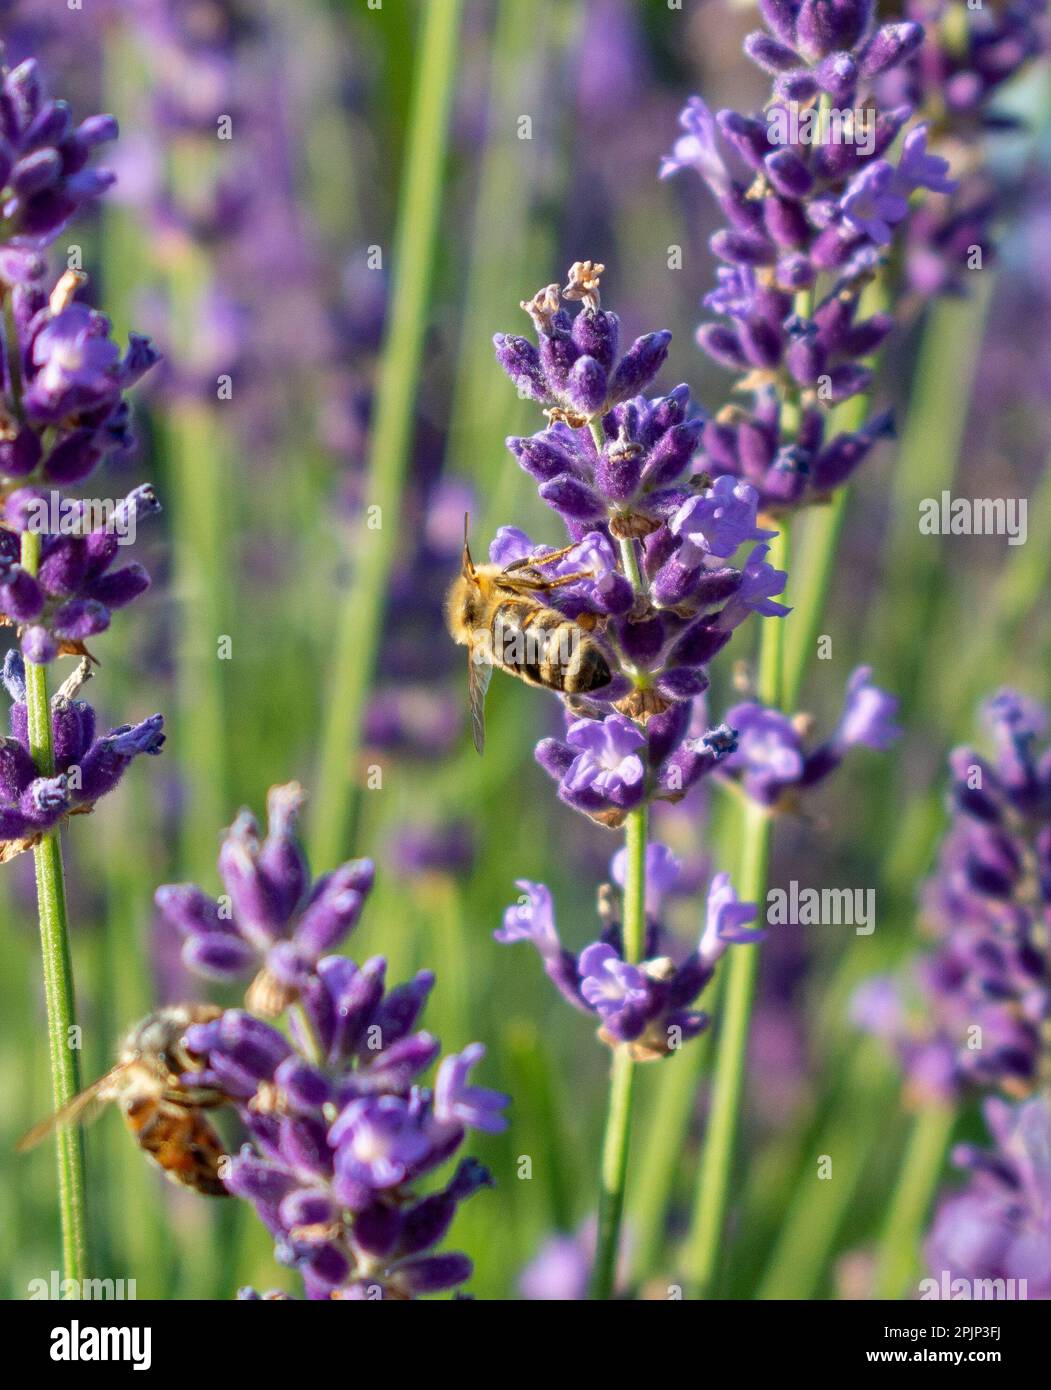 Honigbiene sammelt Nektar aus lila Lavendel (Lavandula angustifolia) Blumen im Garten. Nahaufnahme. Makro. Stockfoto